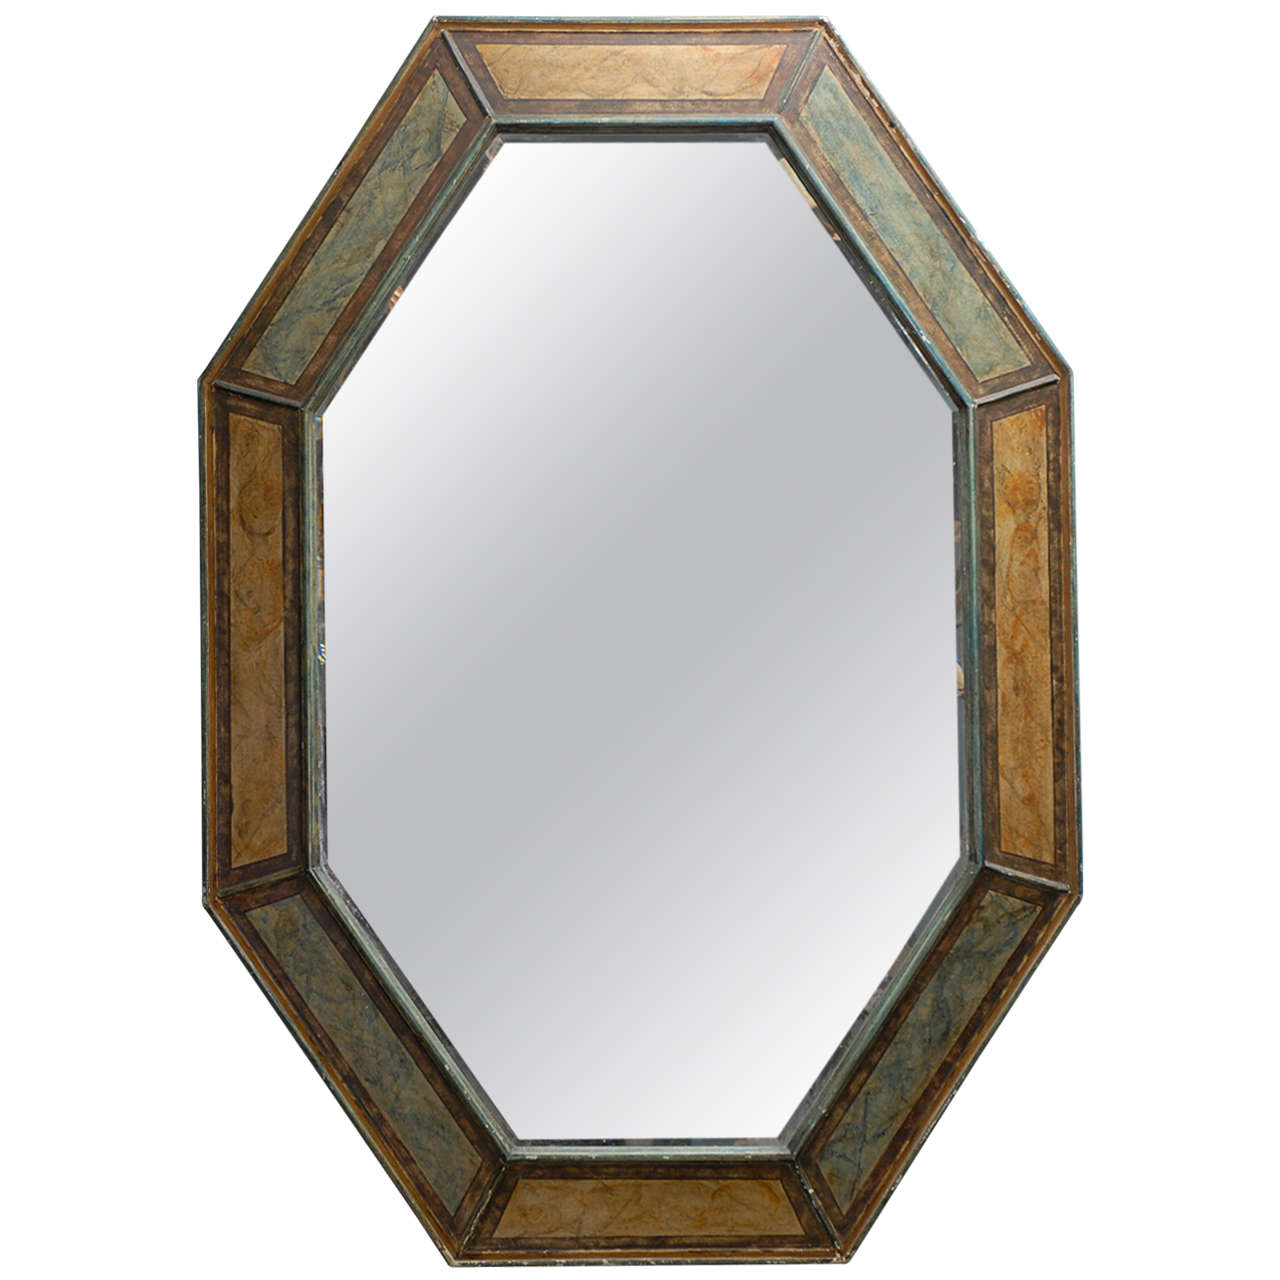 An Italian Octagonal Mirror